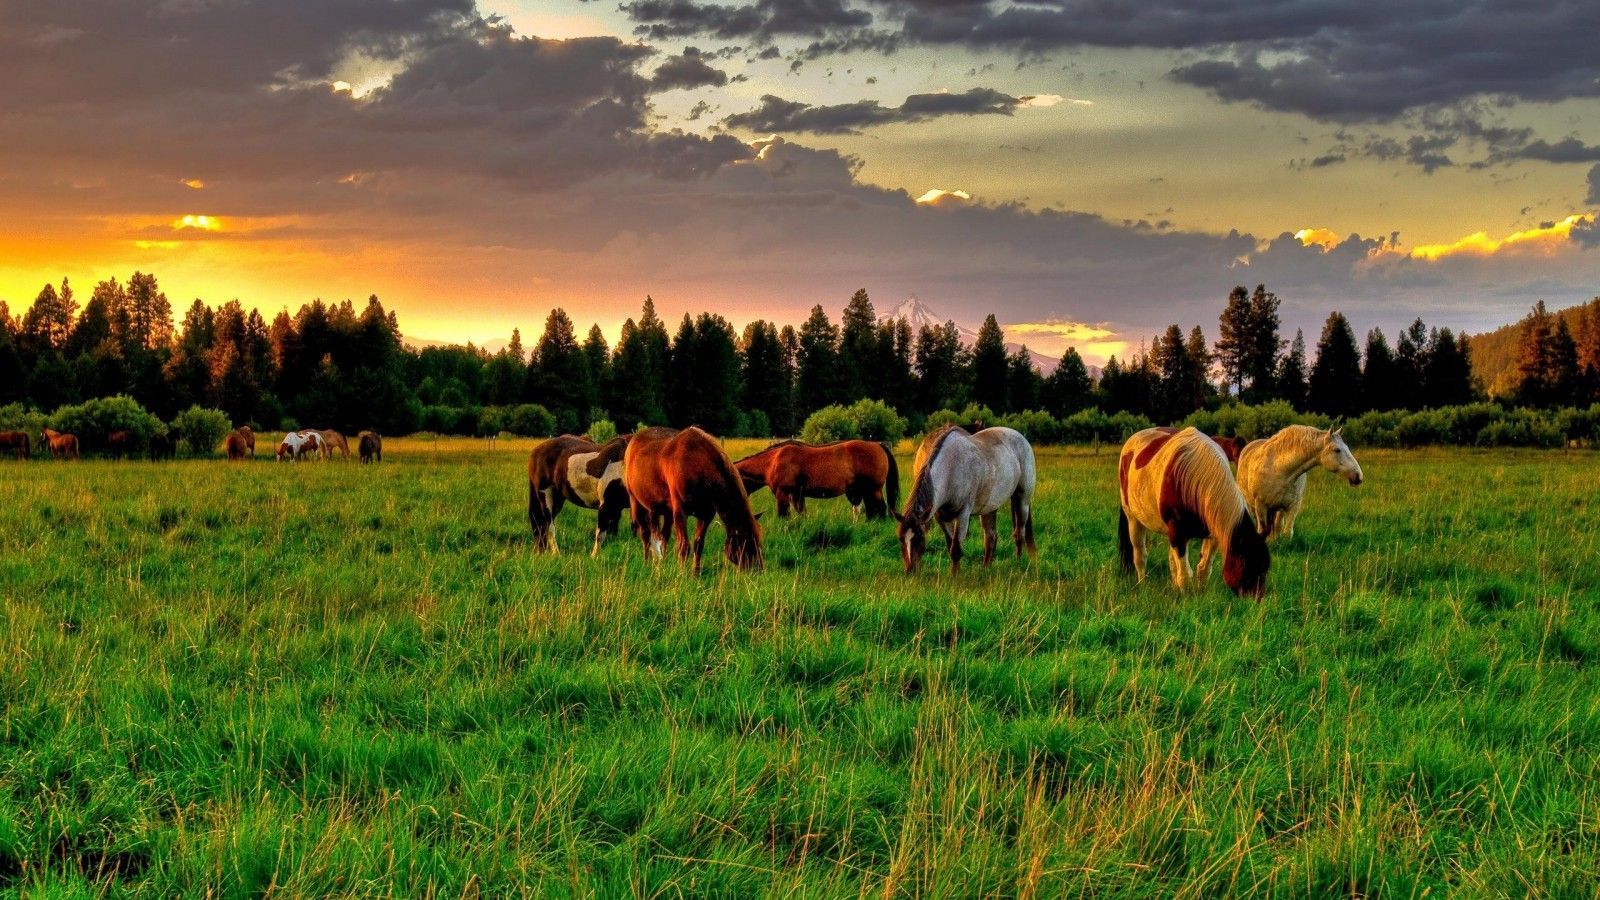 Wild Mustang Horses. Horses Wallpaper wallpaper. Papel de parede de campo, Cavalos, Imagens de cavalos